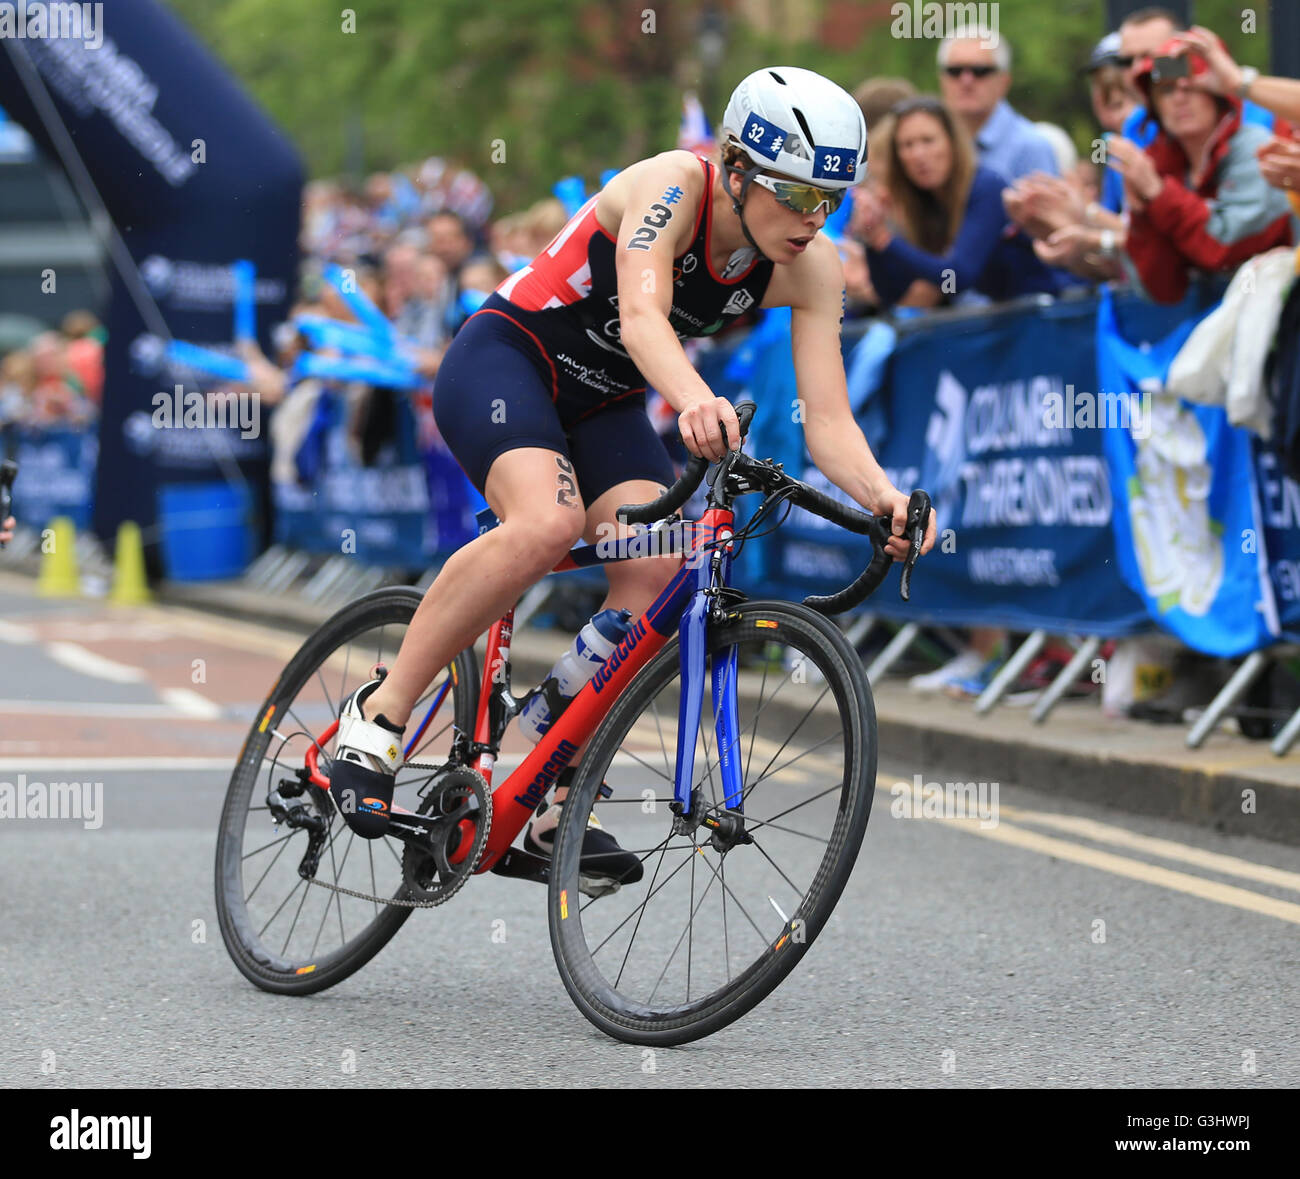 Great Britain's Jessica Learmonth in the Elite Women's ITU World Triathlon Series in Leeds. Stock Photo